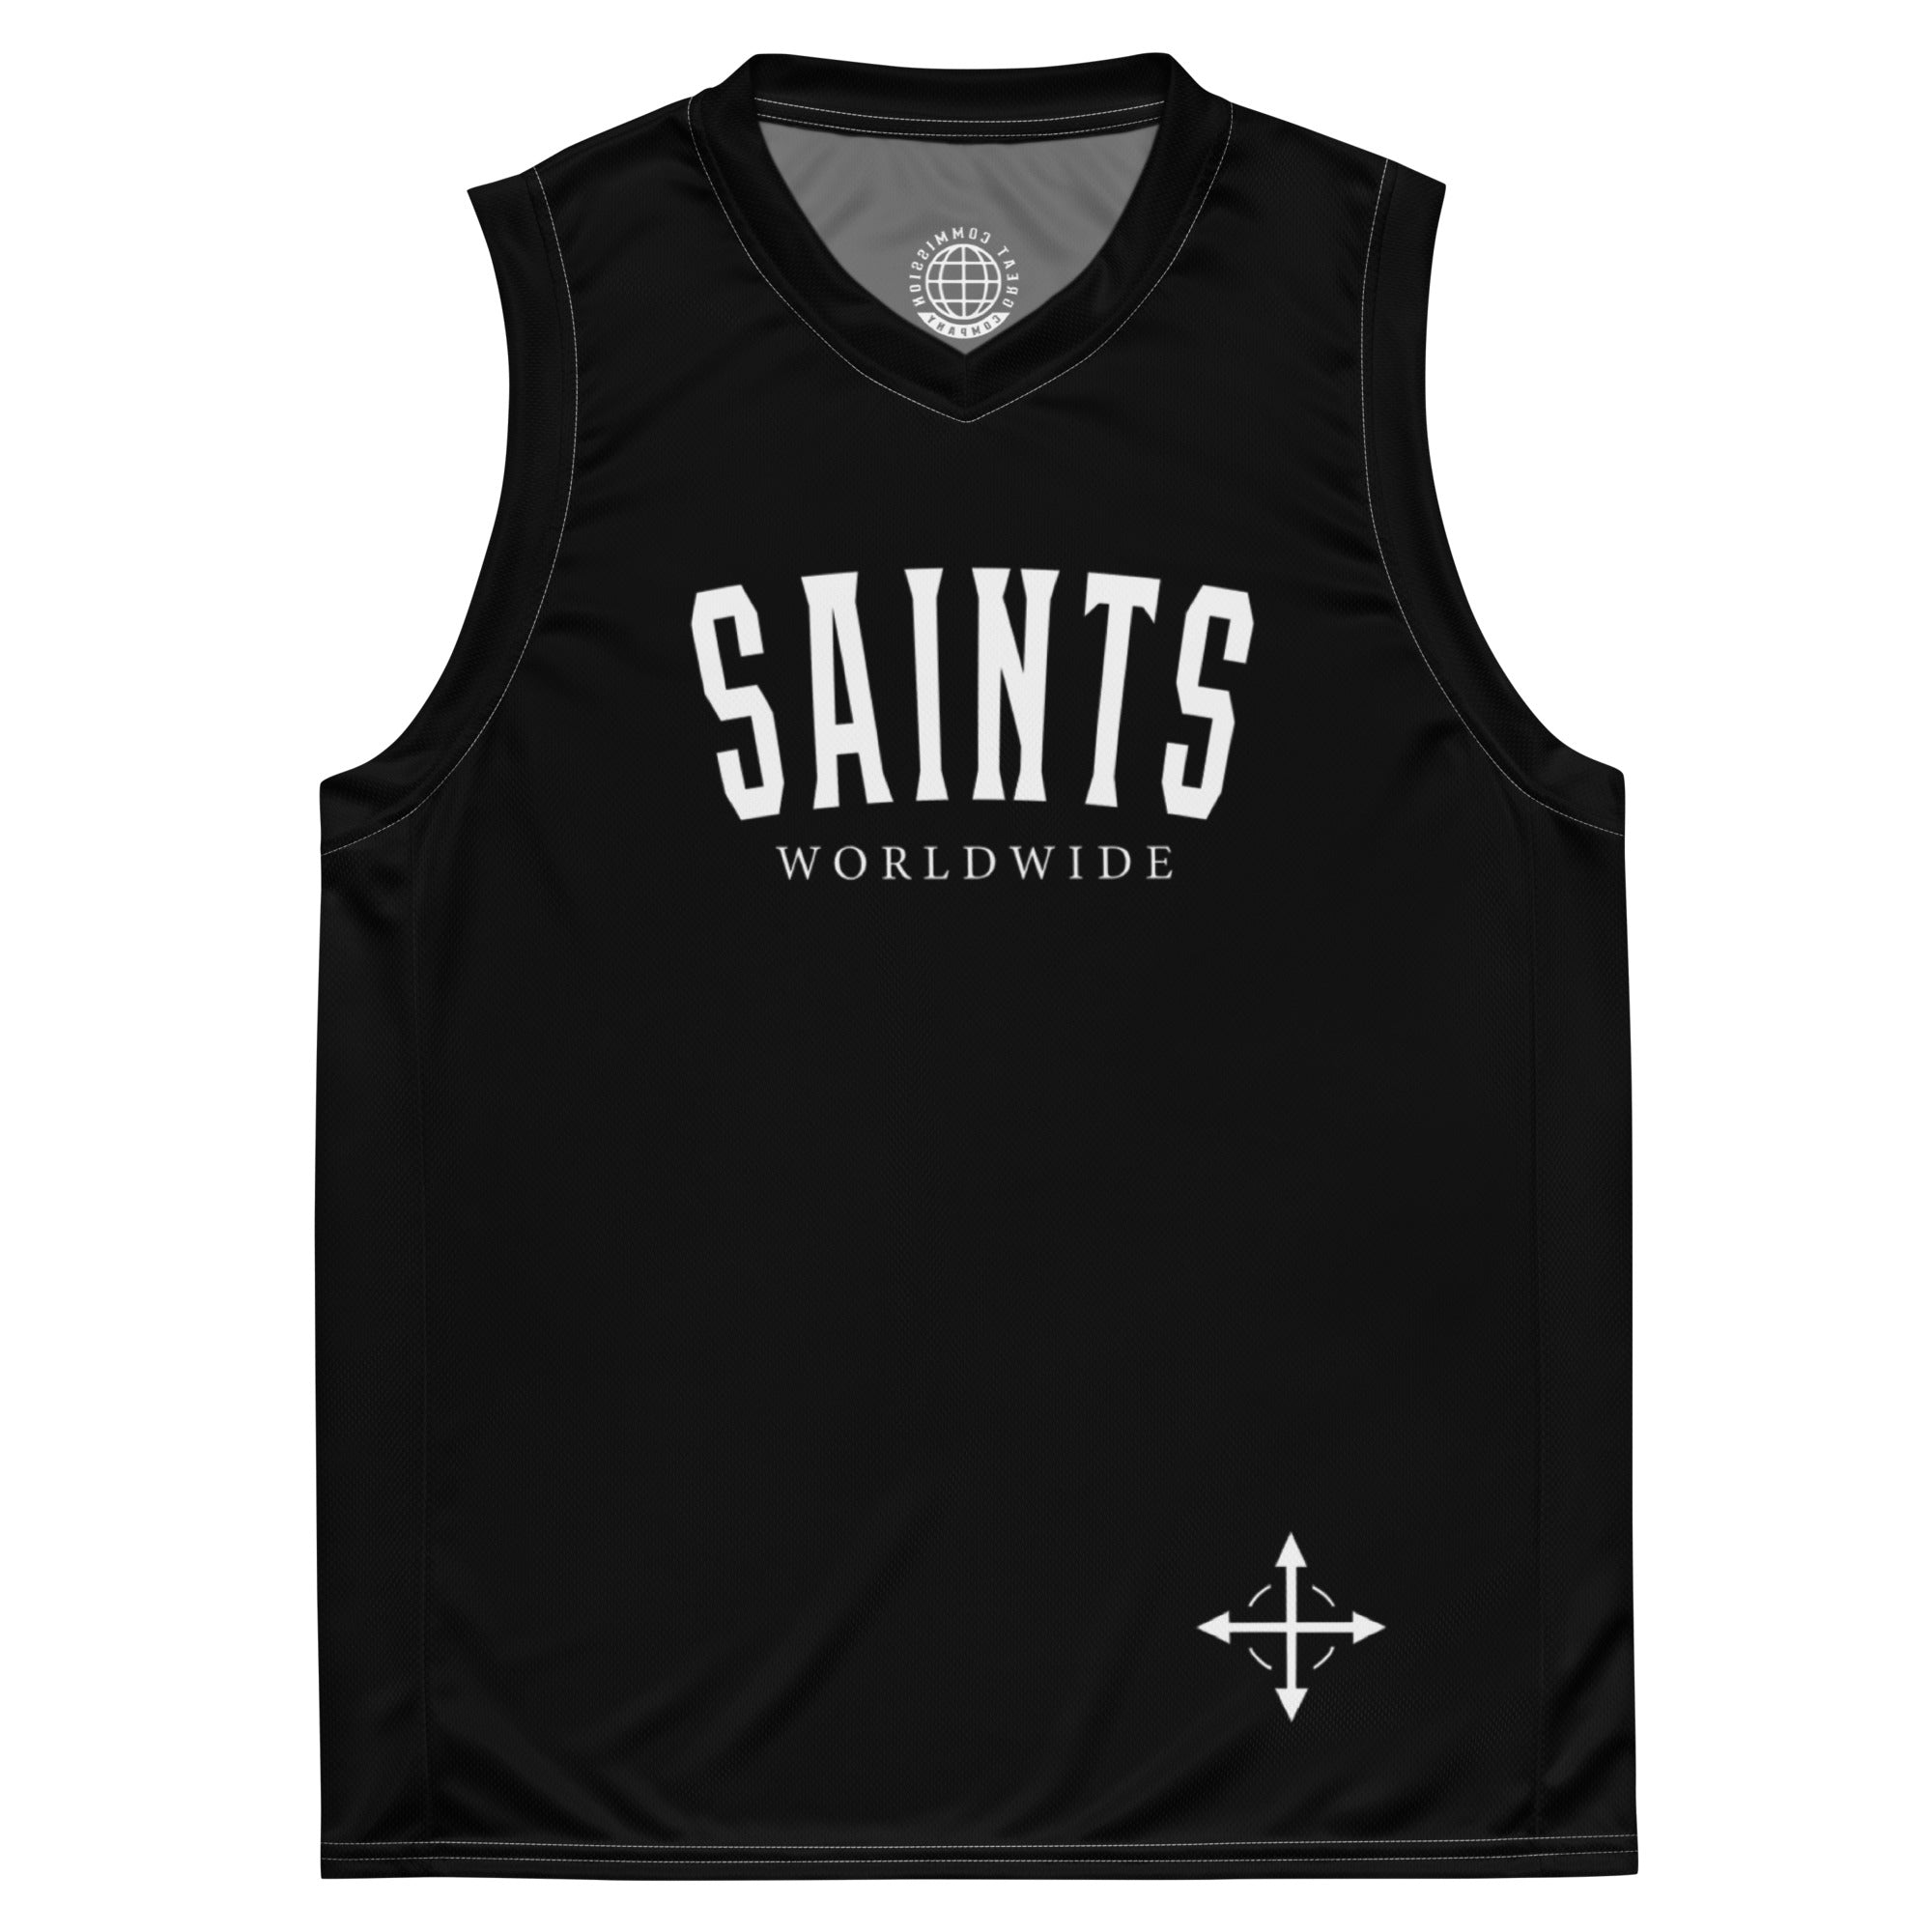 SAINTS-WORLDWIDE-jersey-vest-front-Black